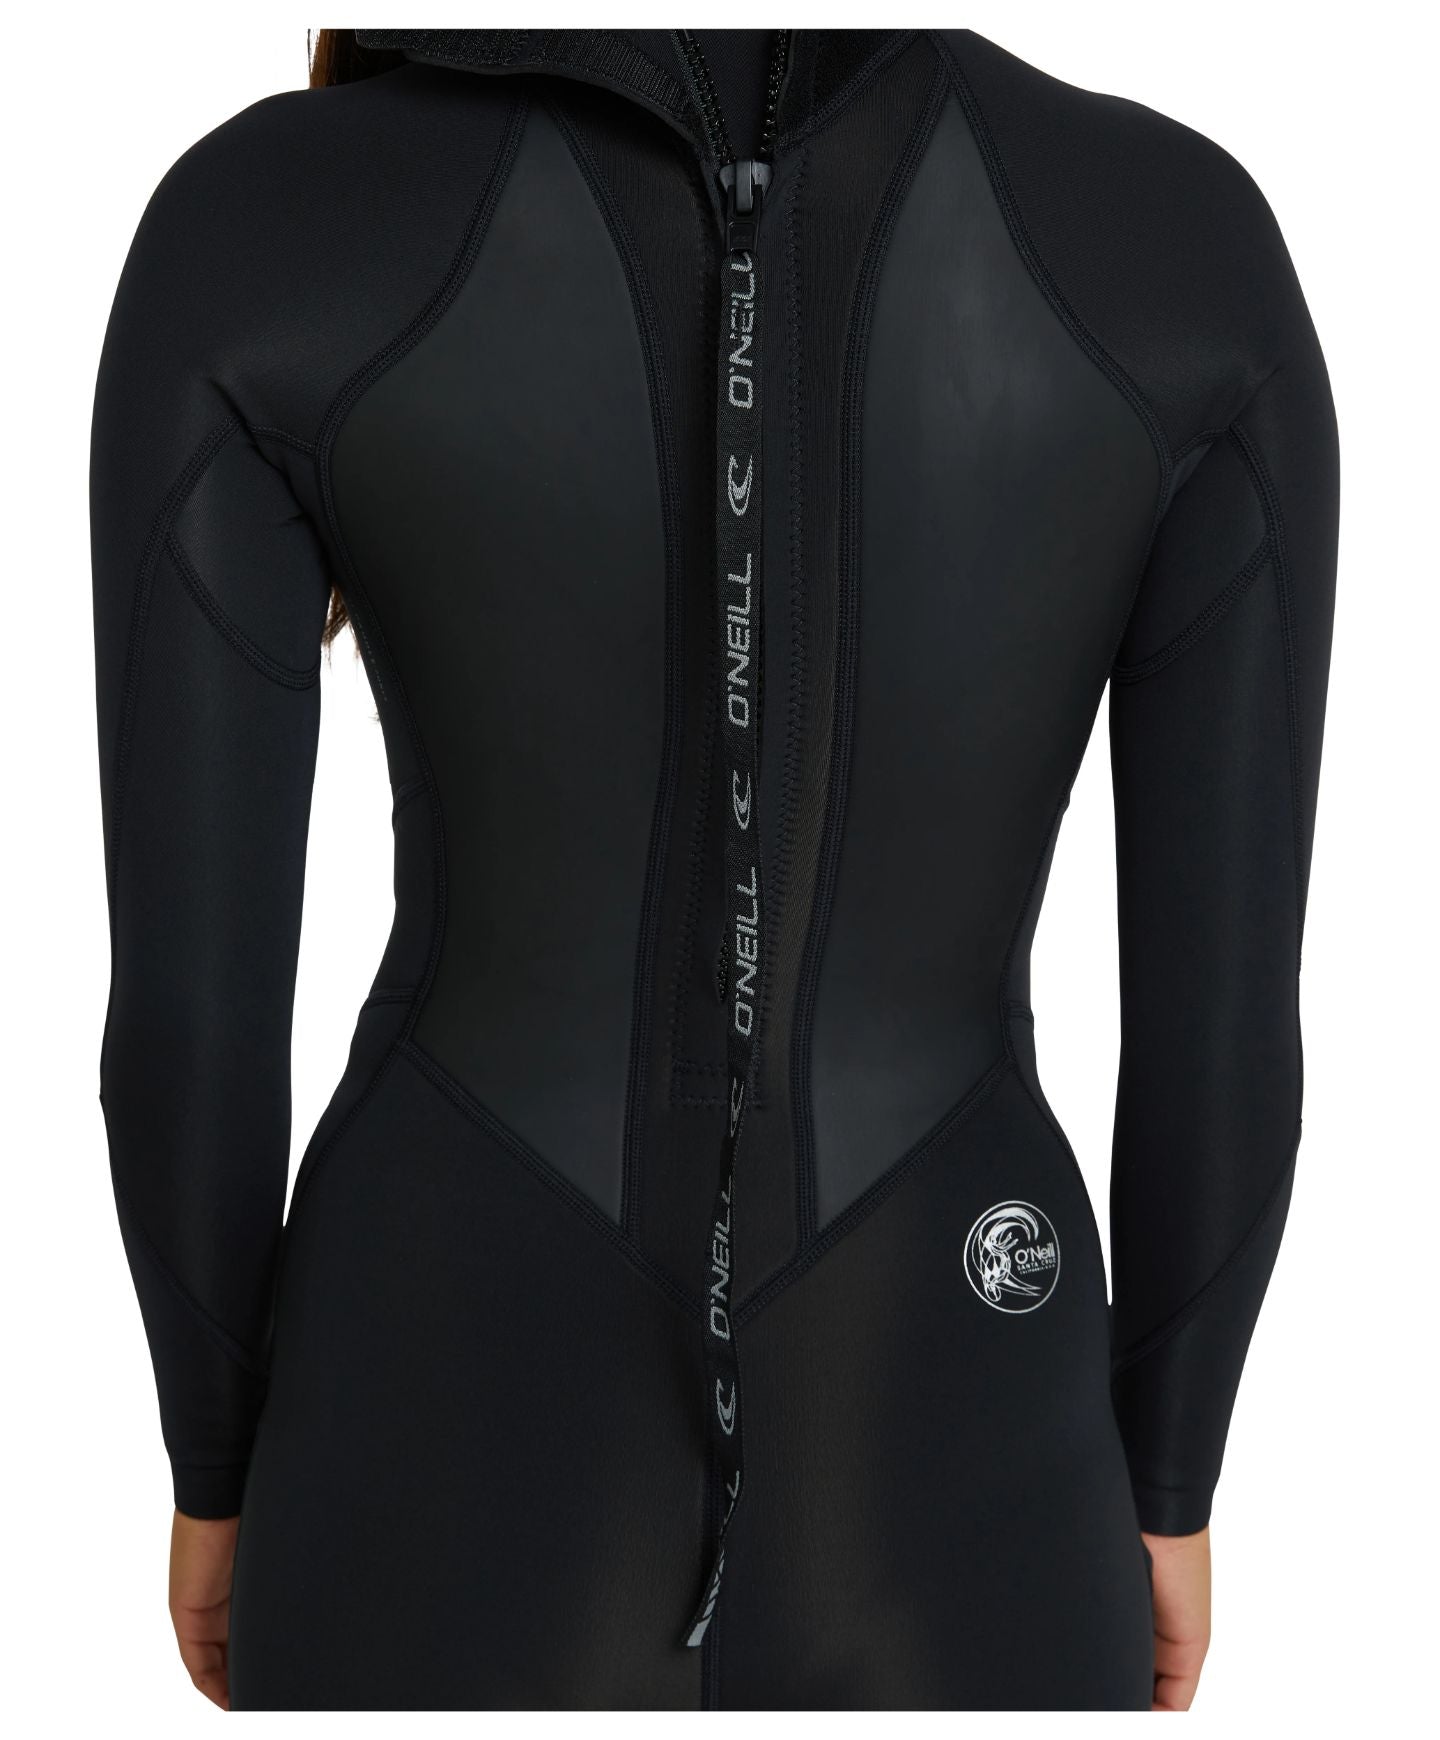 Women's Cruise BZ LS Mid Spring Suit 2mm Wetsuit - Black